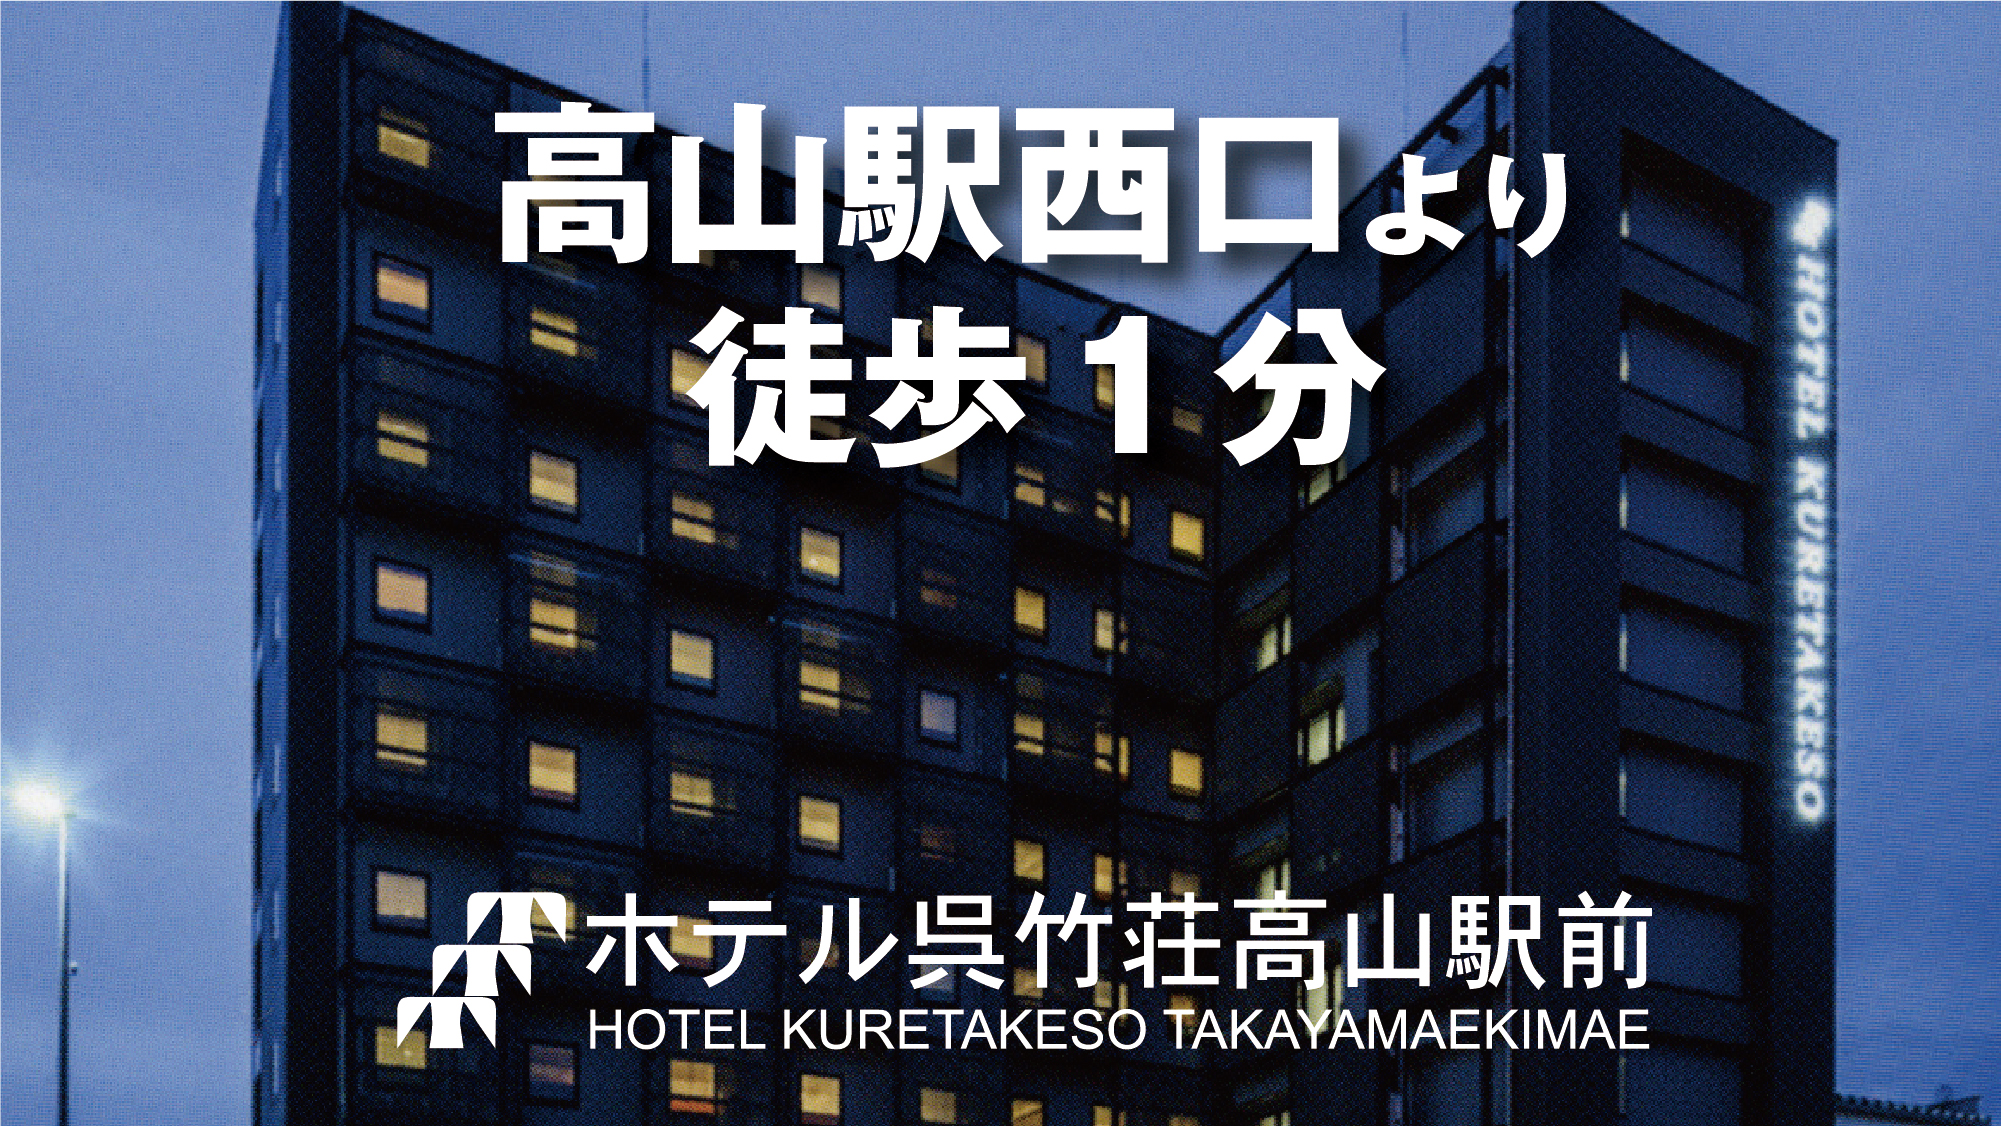 Hotel Kuretakeso Takayamaekimae